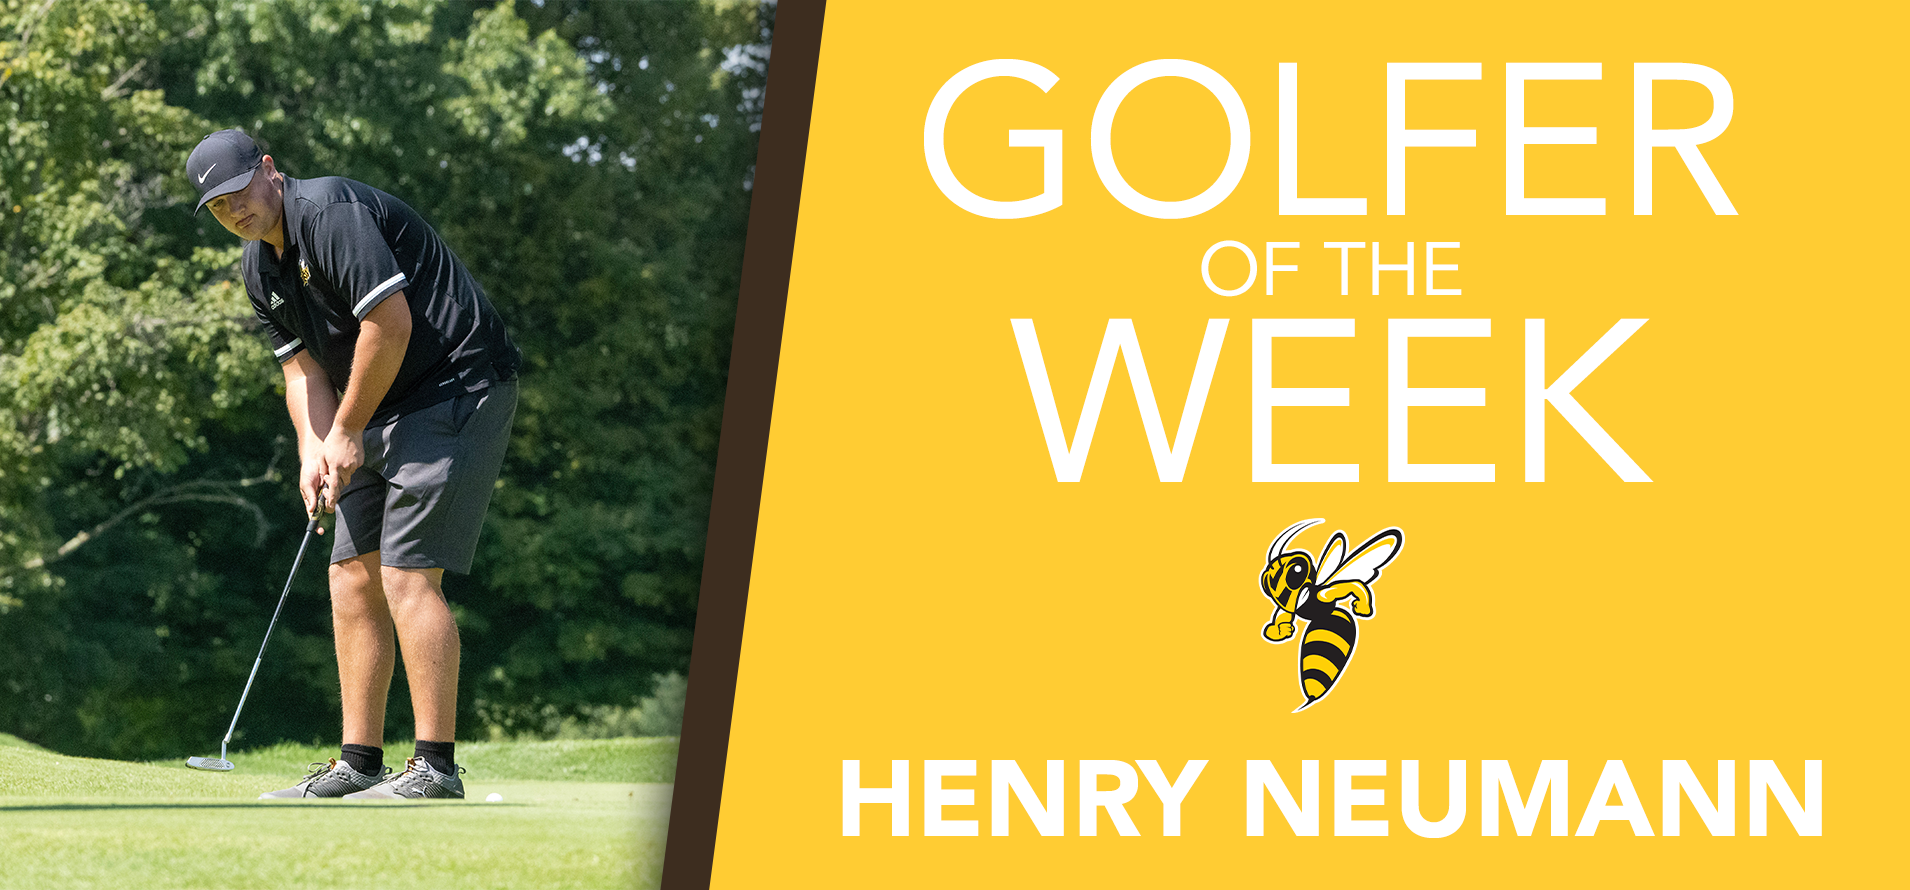 Neumann Gains First Career OAC Men’s Golfer of the Week Accolade